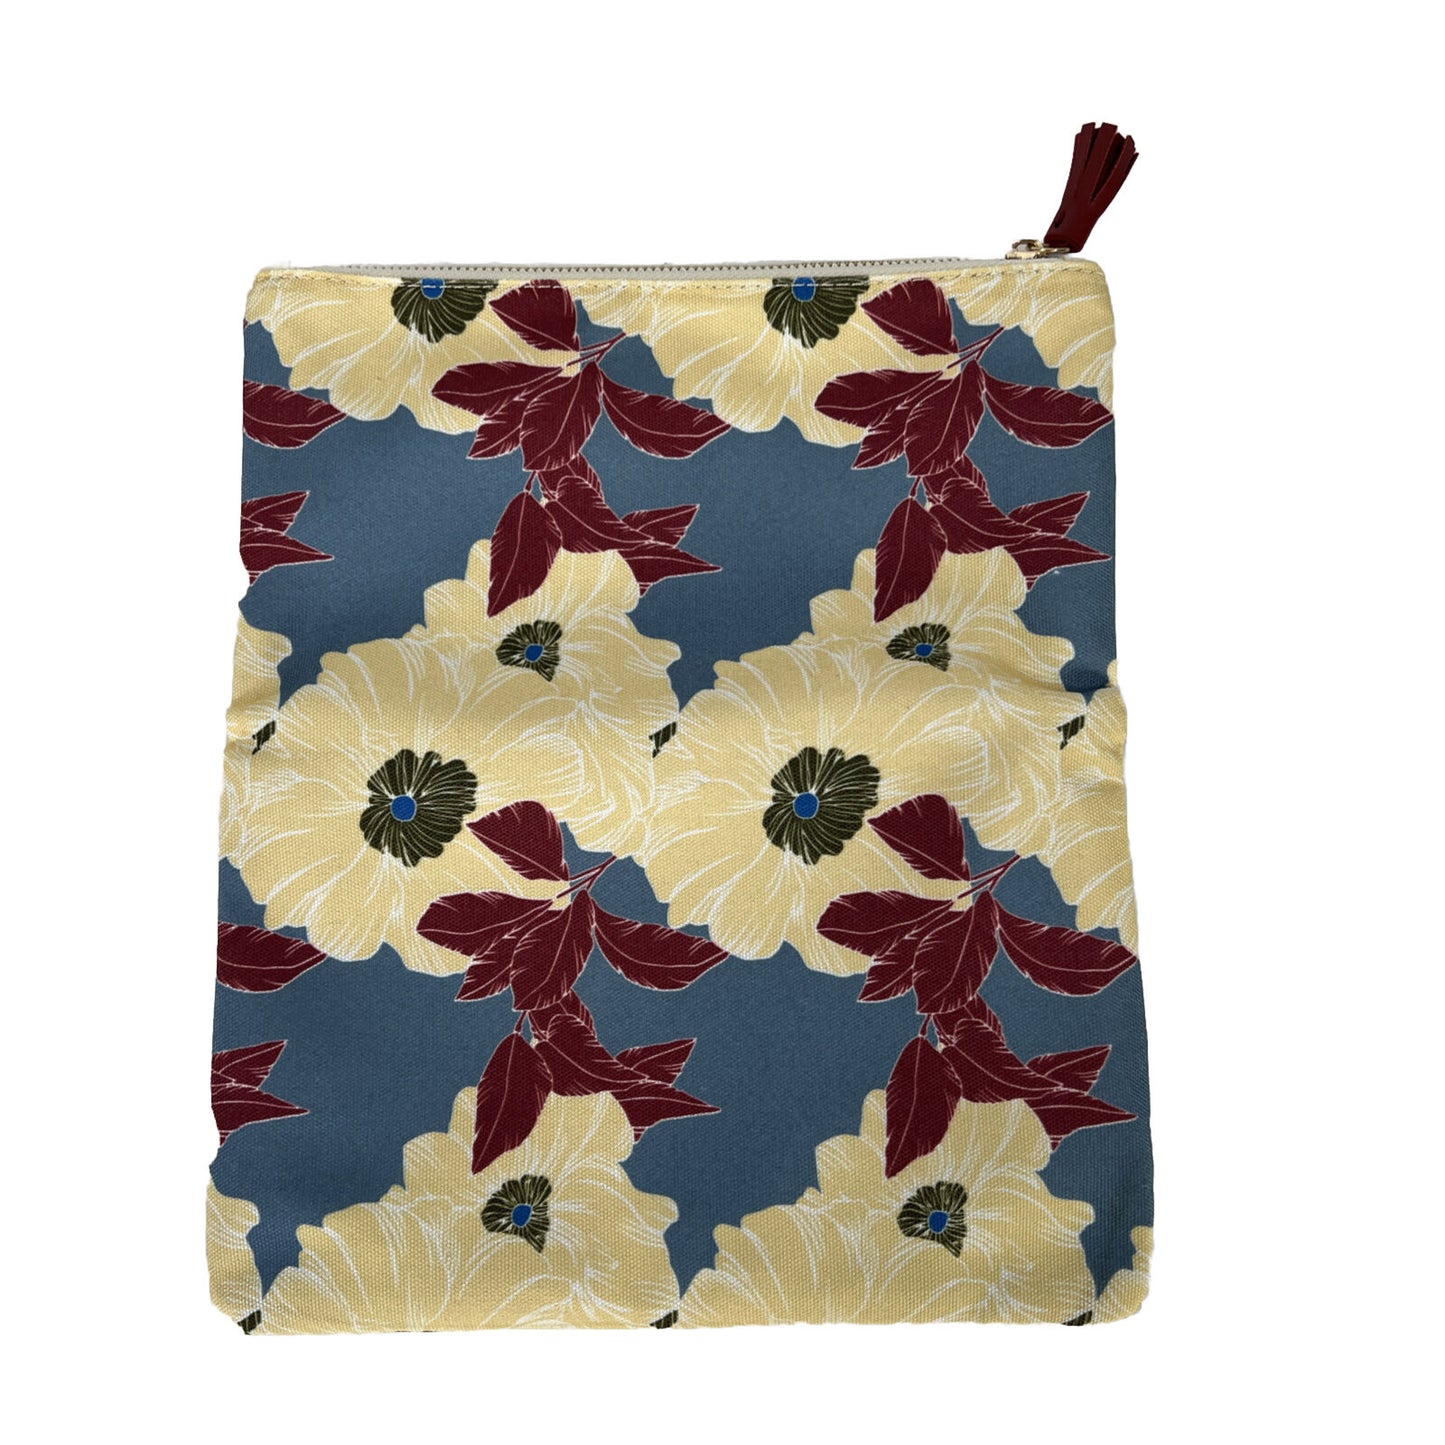 Rachel Pally Women's Ivory/ Multi-Color Floral Foldover Clutch Bag